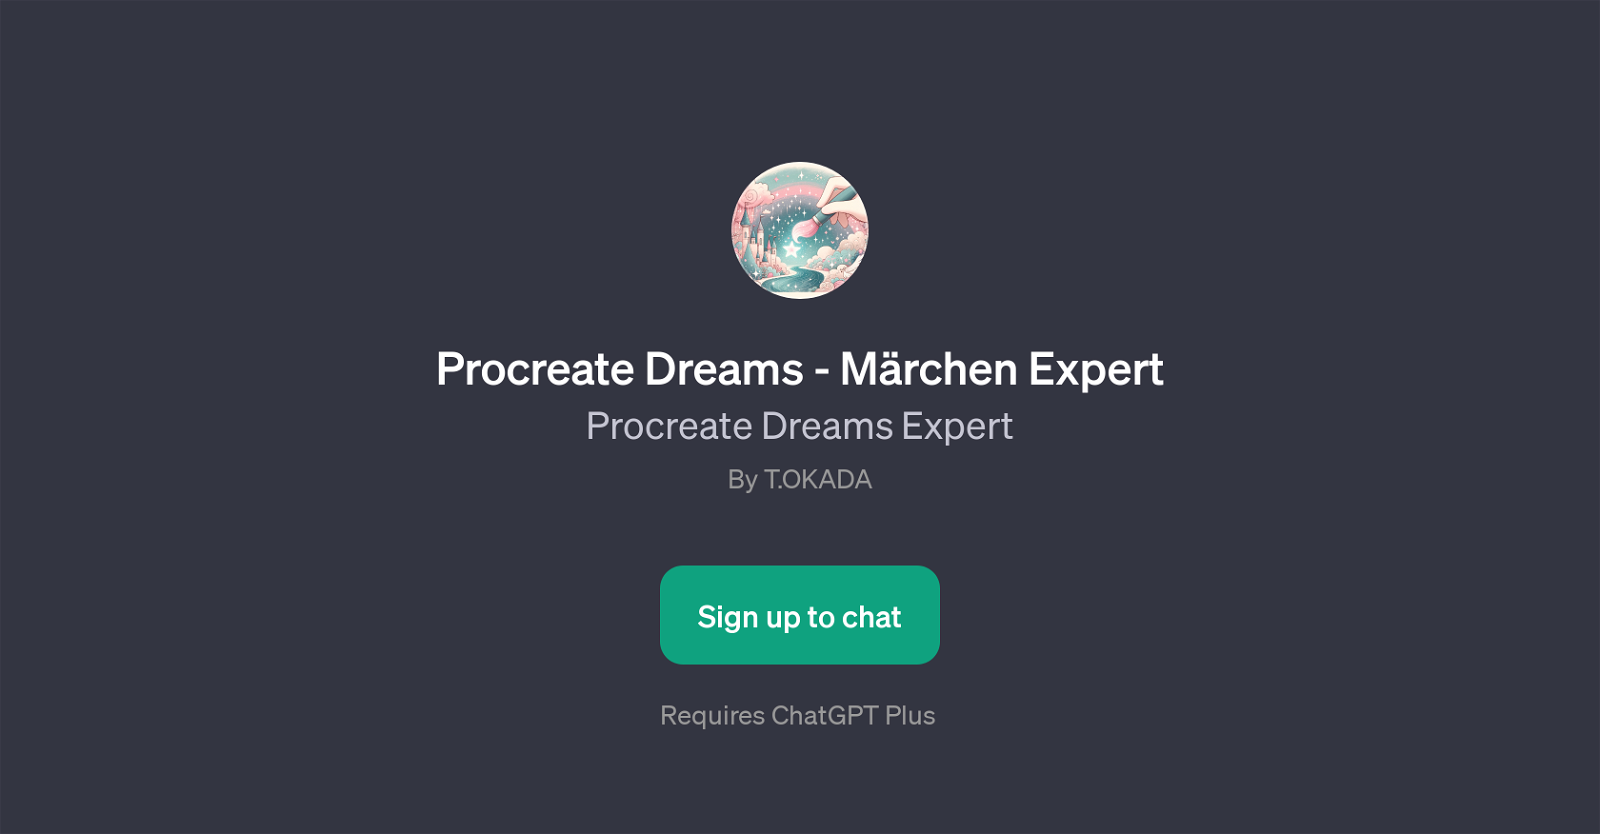 Procreate Dreams - Mrchen Expert website